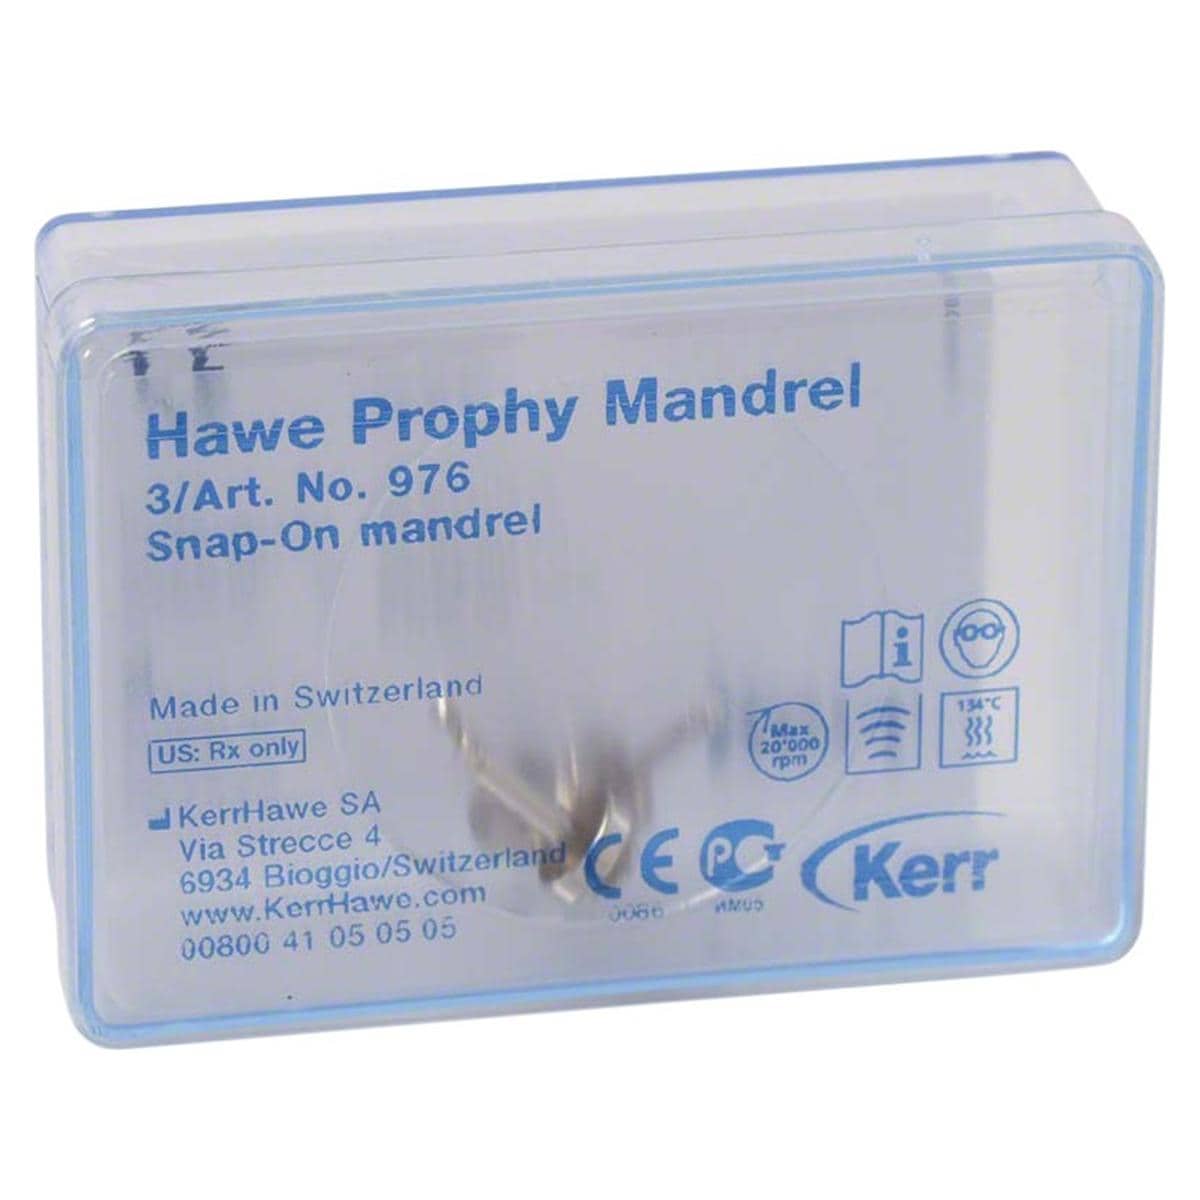 Hawe Prophy mandrel Snap-on - 976, 3 stuks